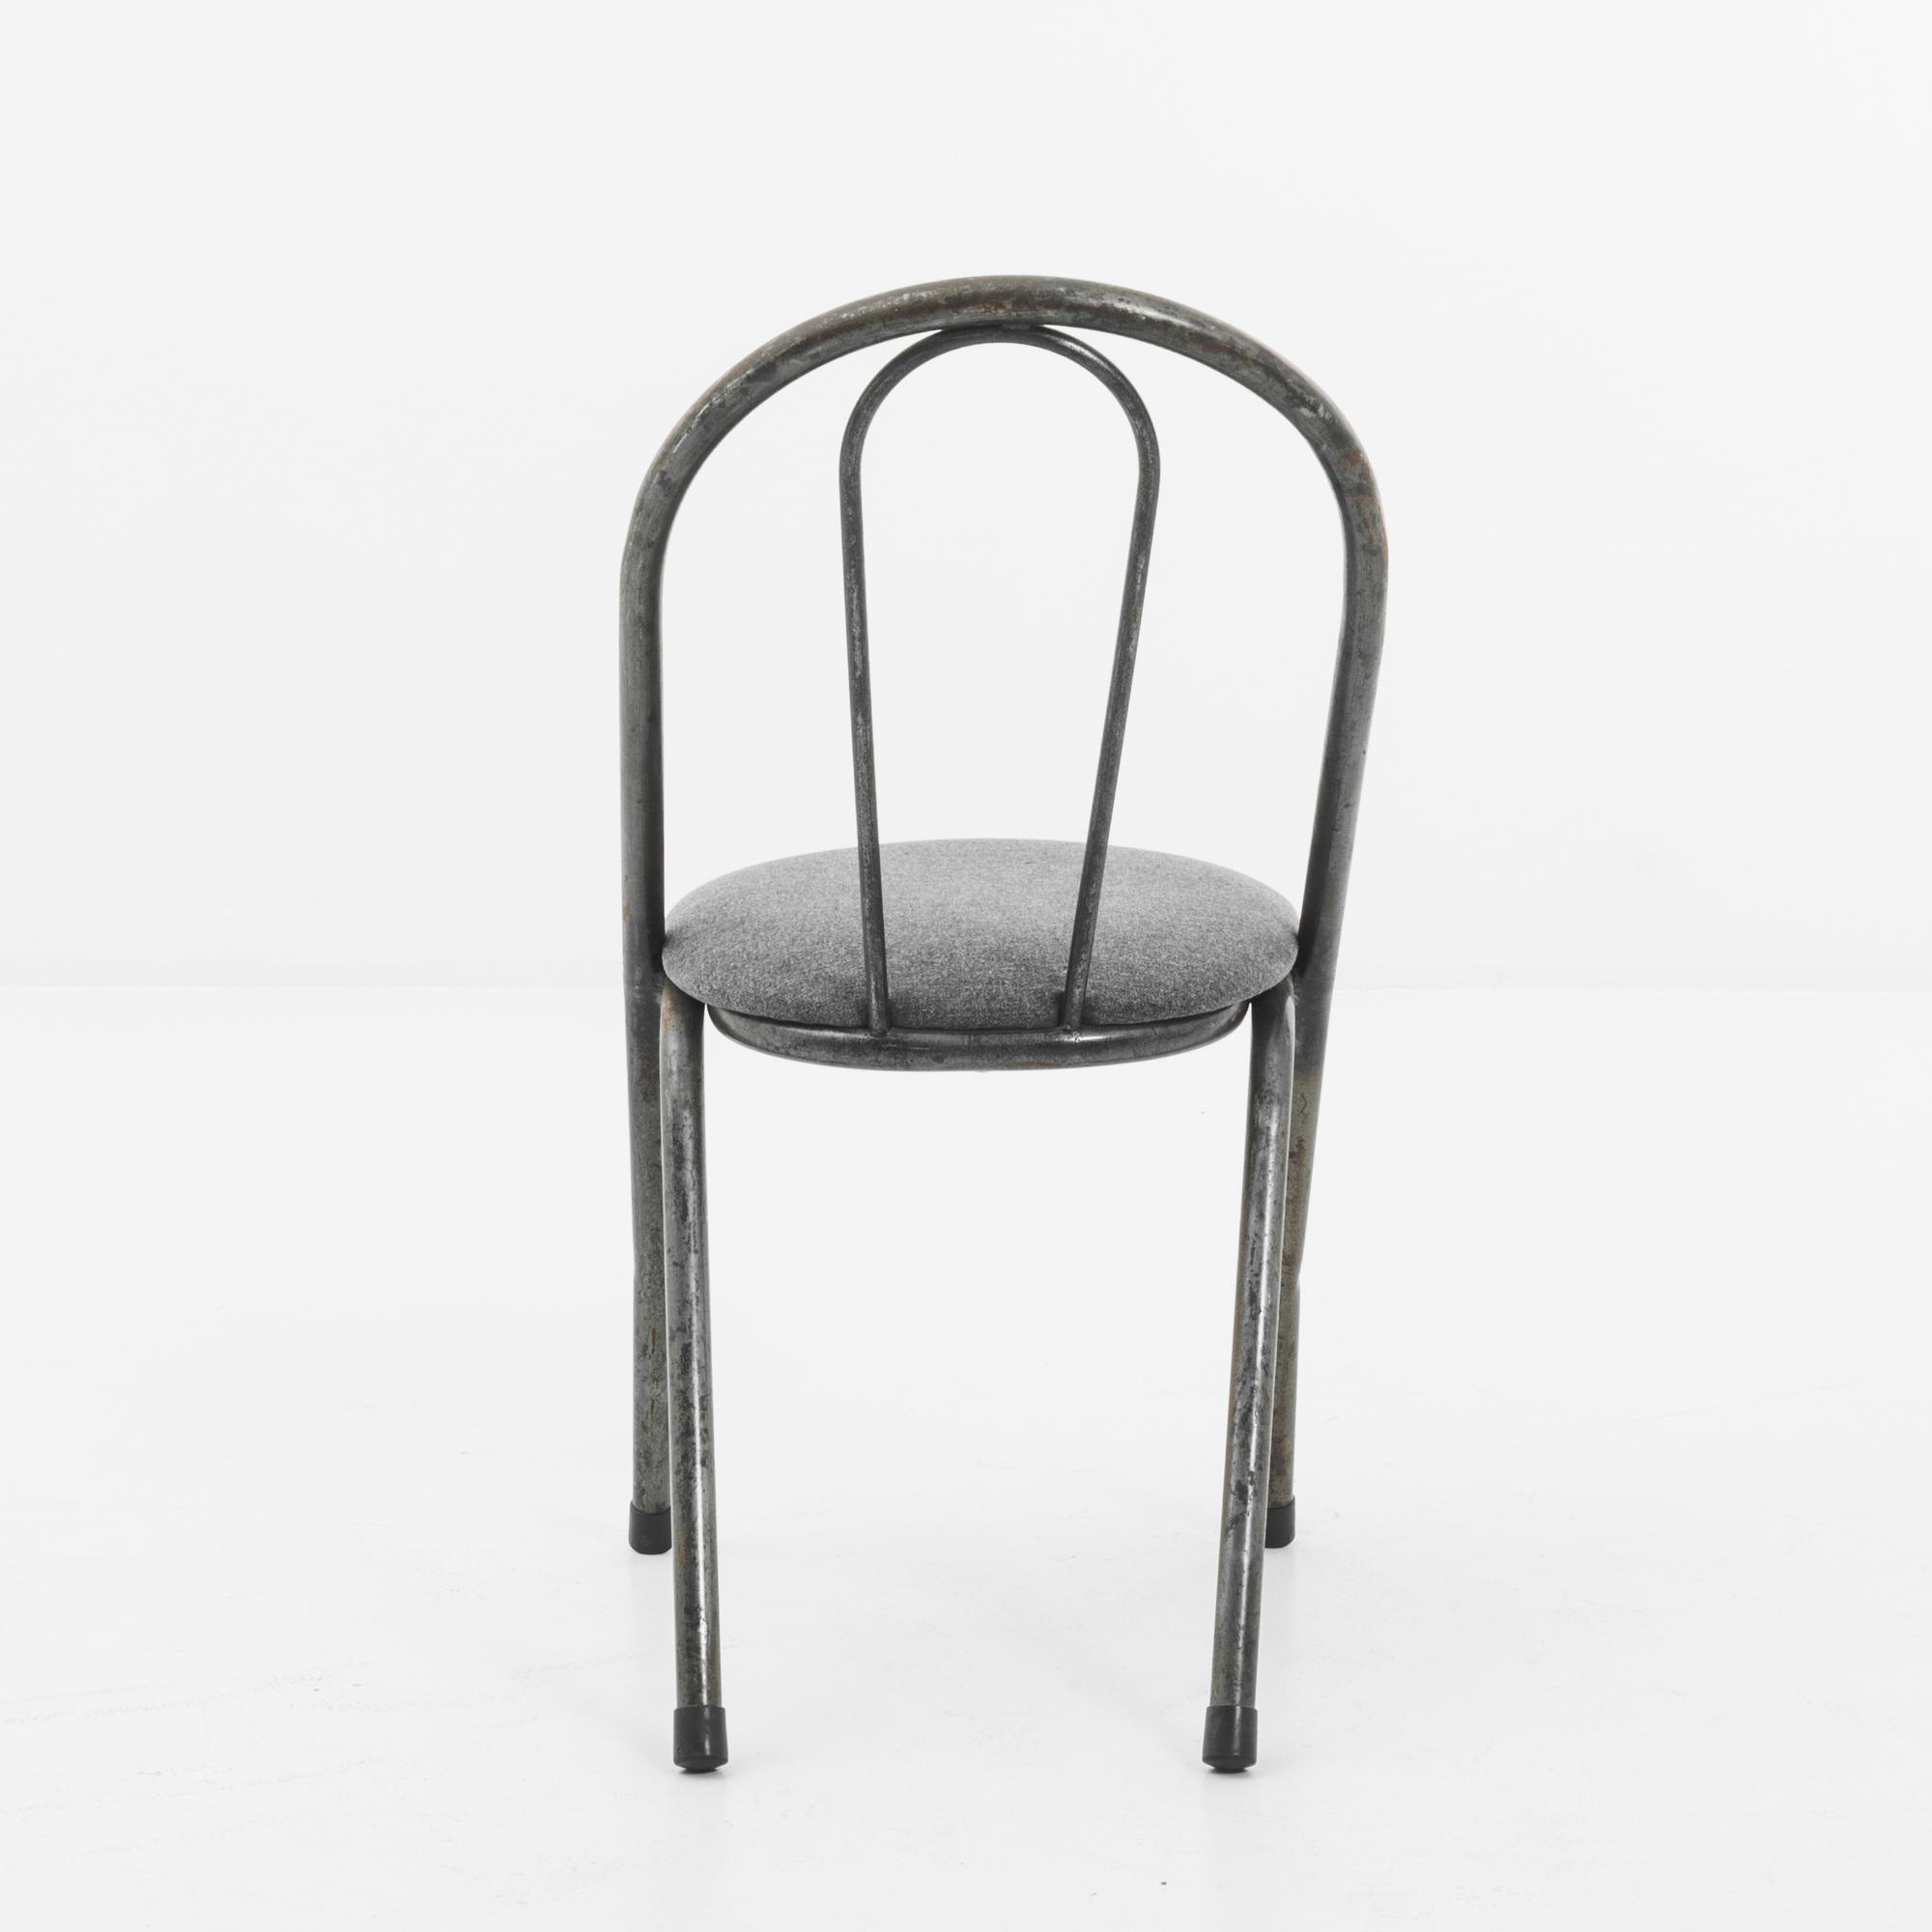 Mid-20th Century 1950s British Metal Chair